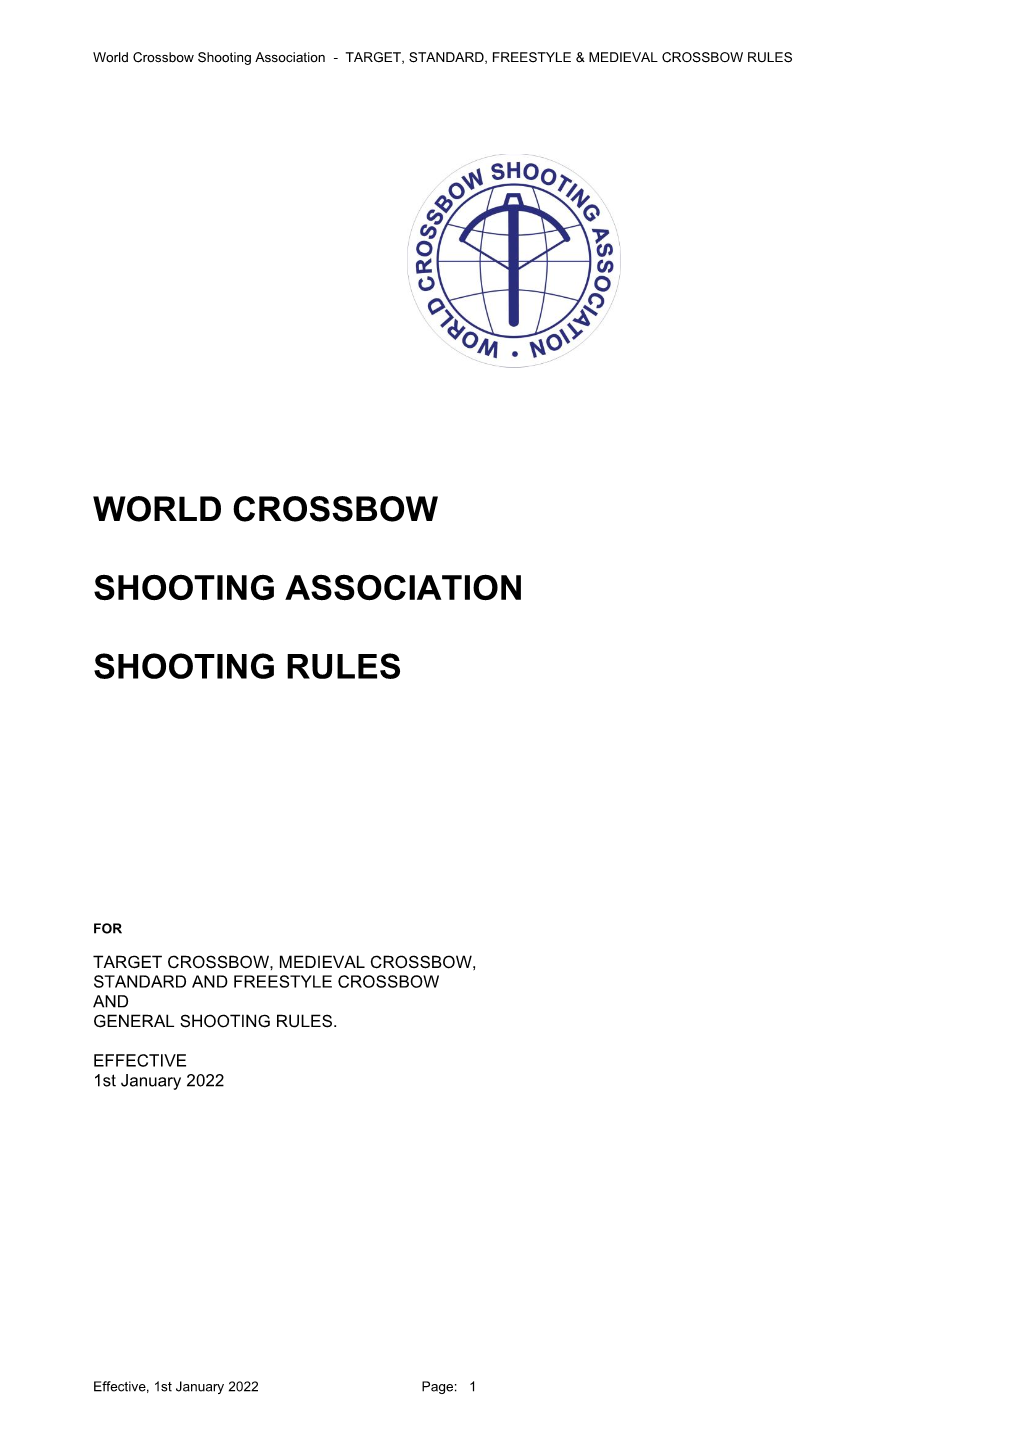 World Crossbow Shooting Association Shooting Rules